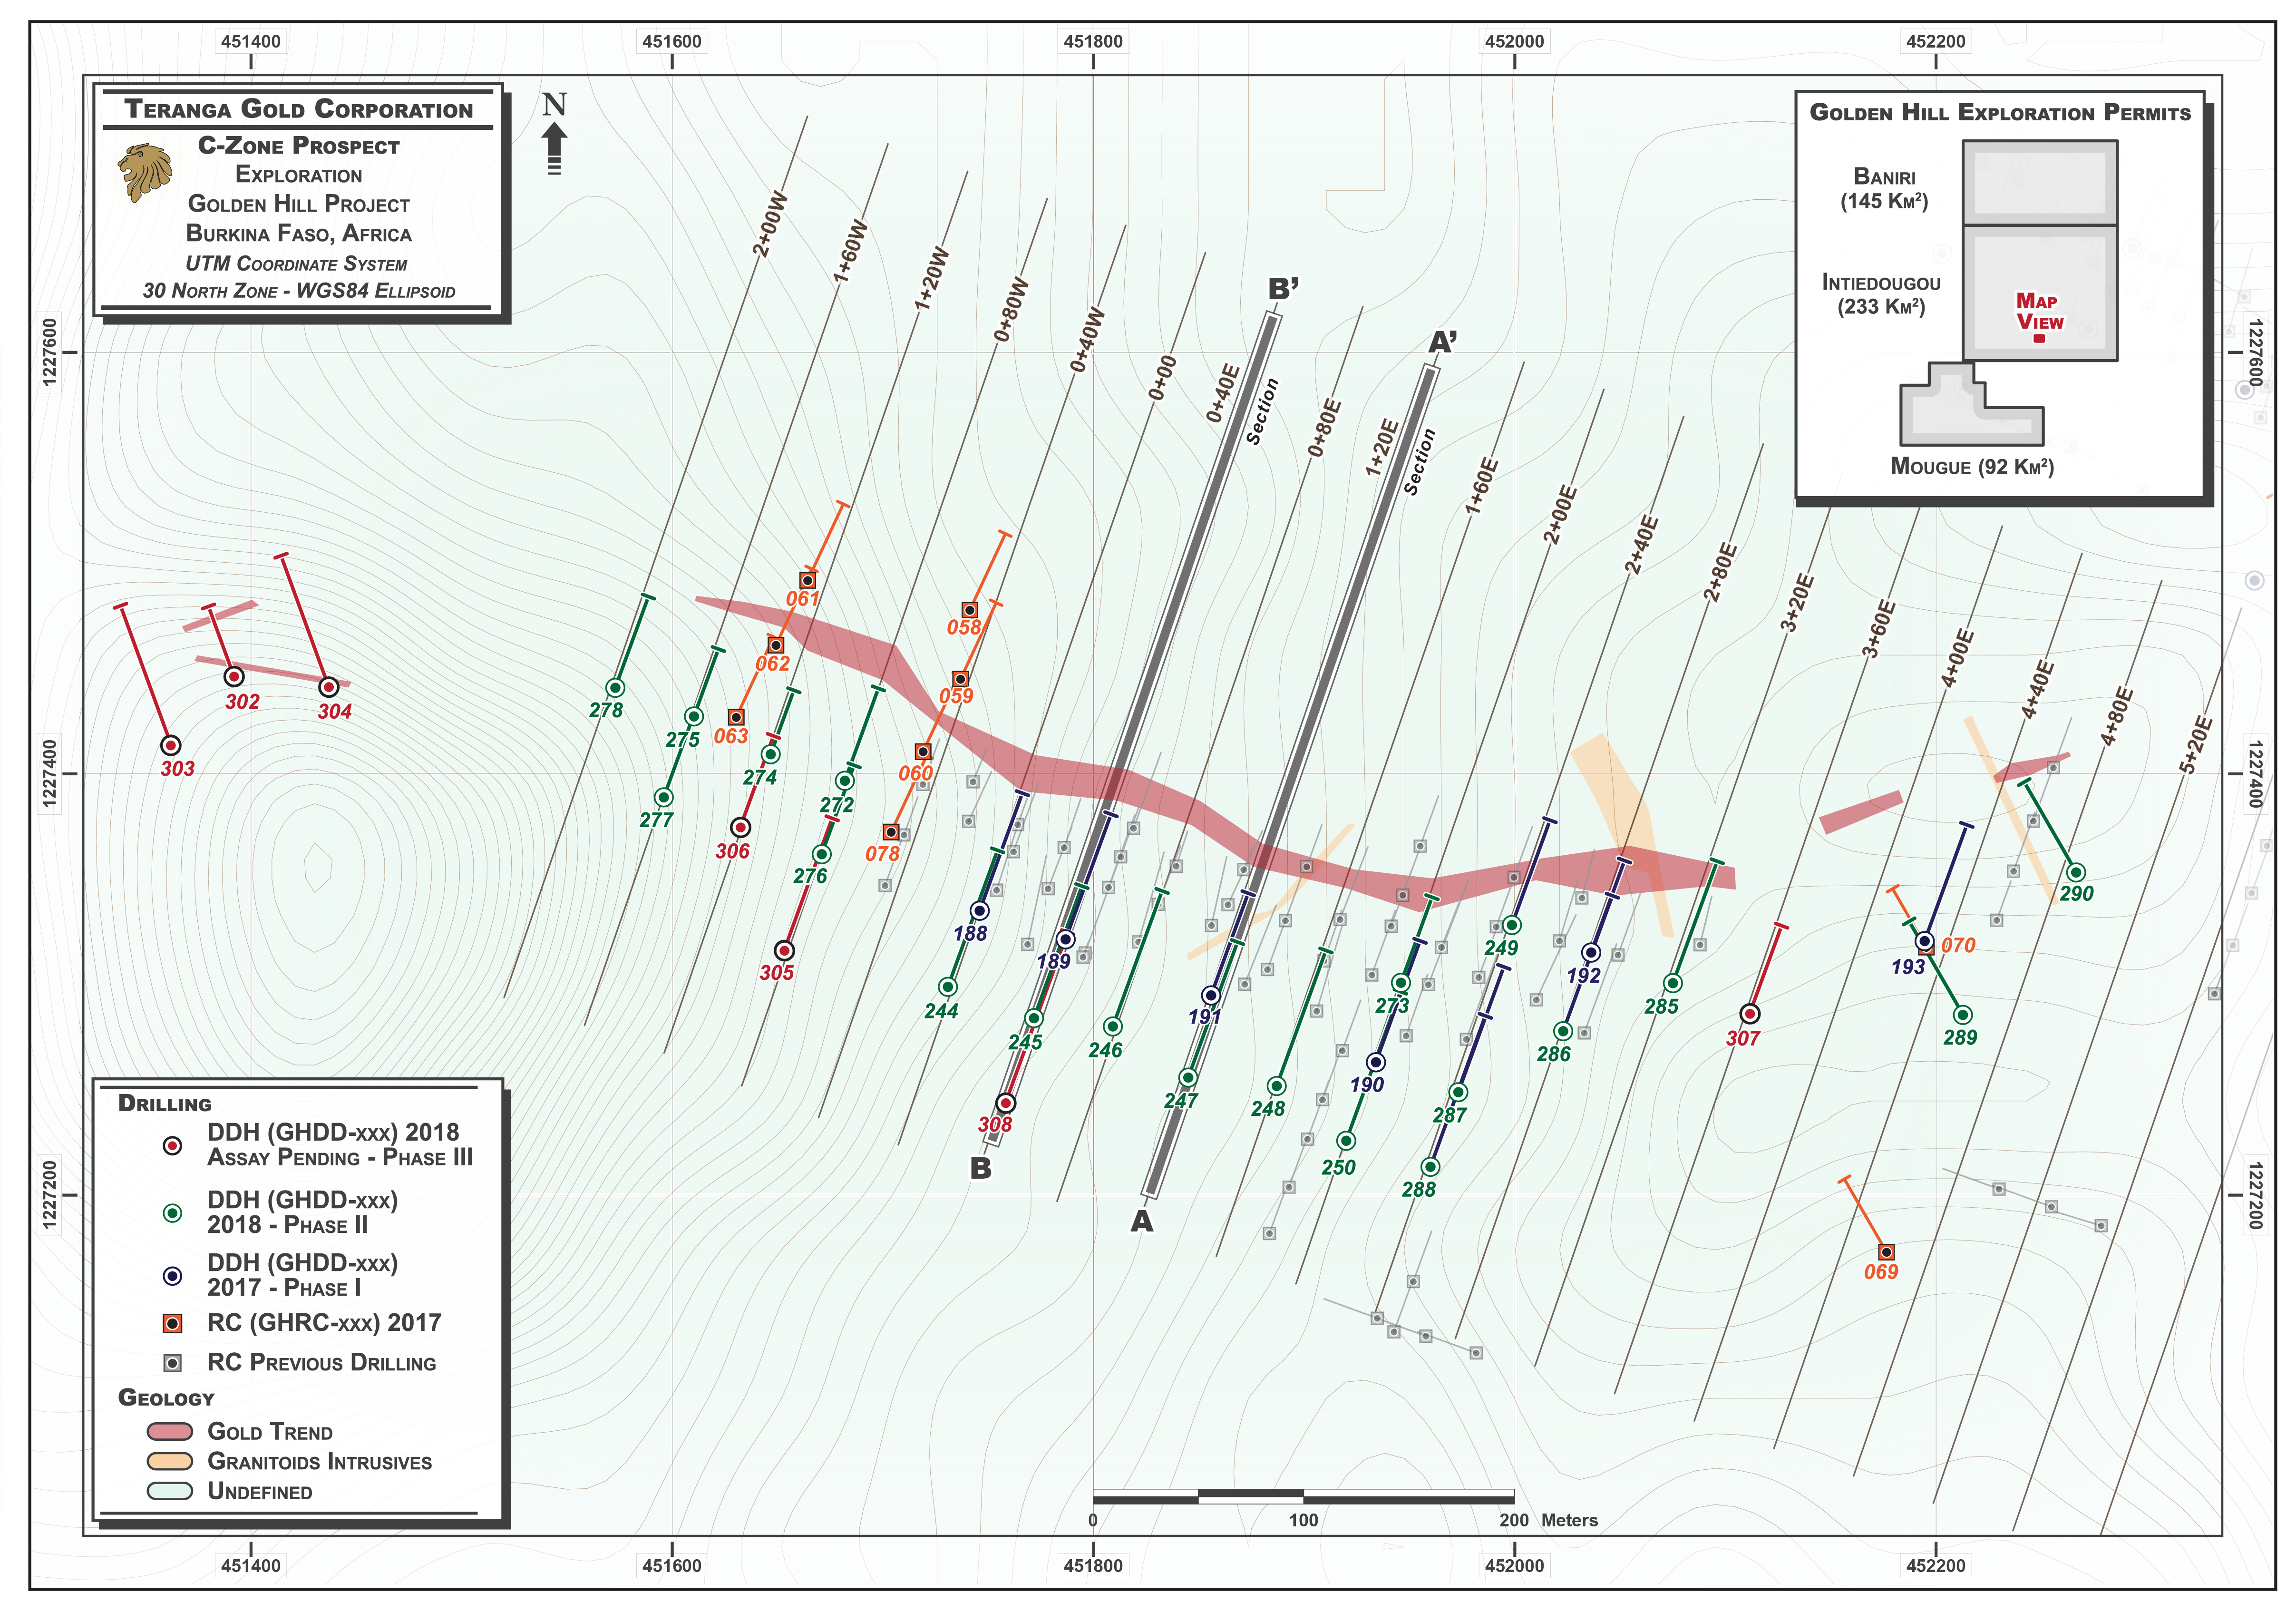 Figure 2 - C-Zone Prospect Drill Plan